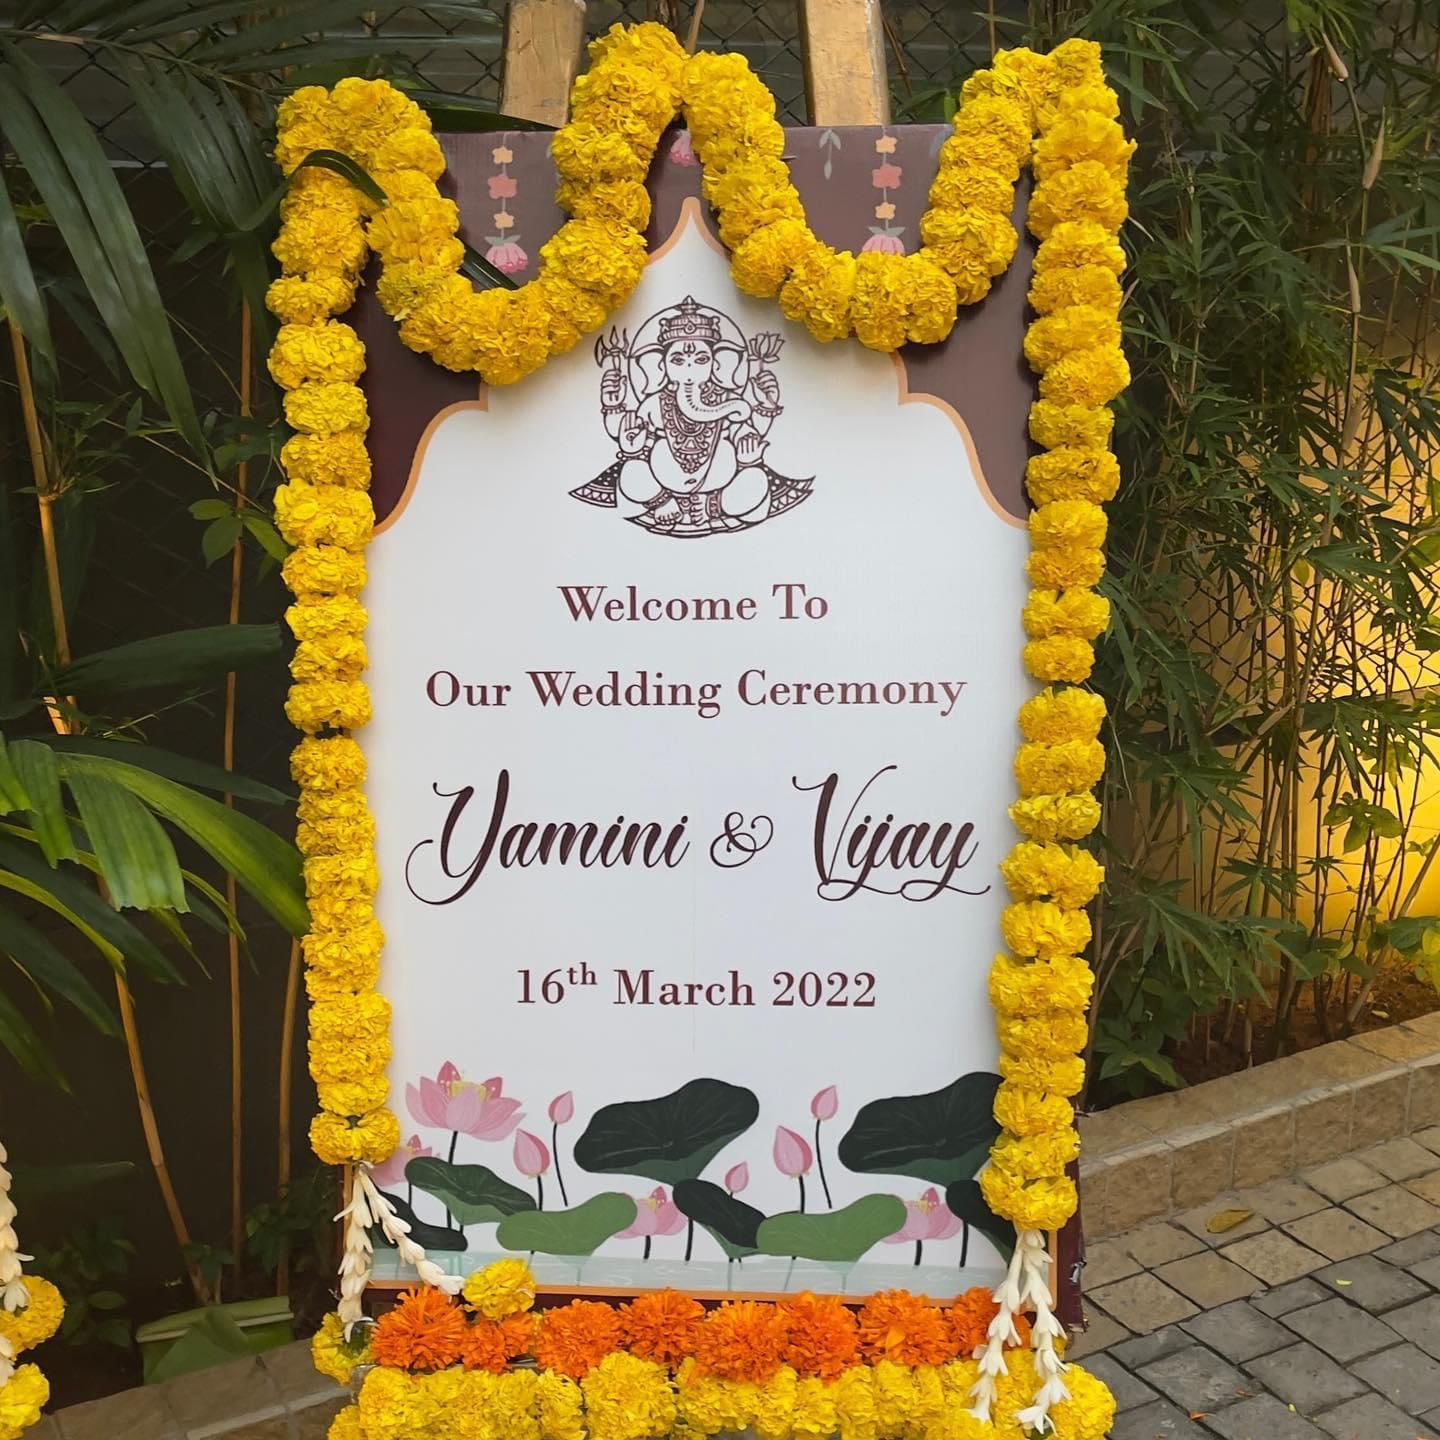 vijay Karthik kannan yamini Yagna Moorthy getting married today